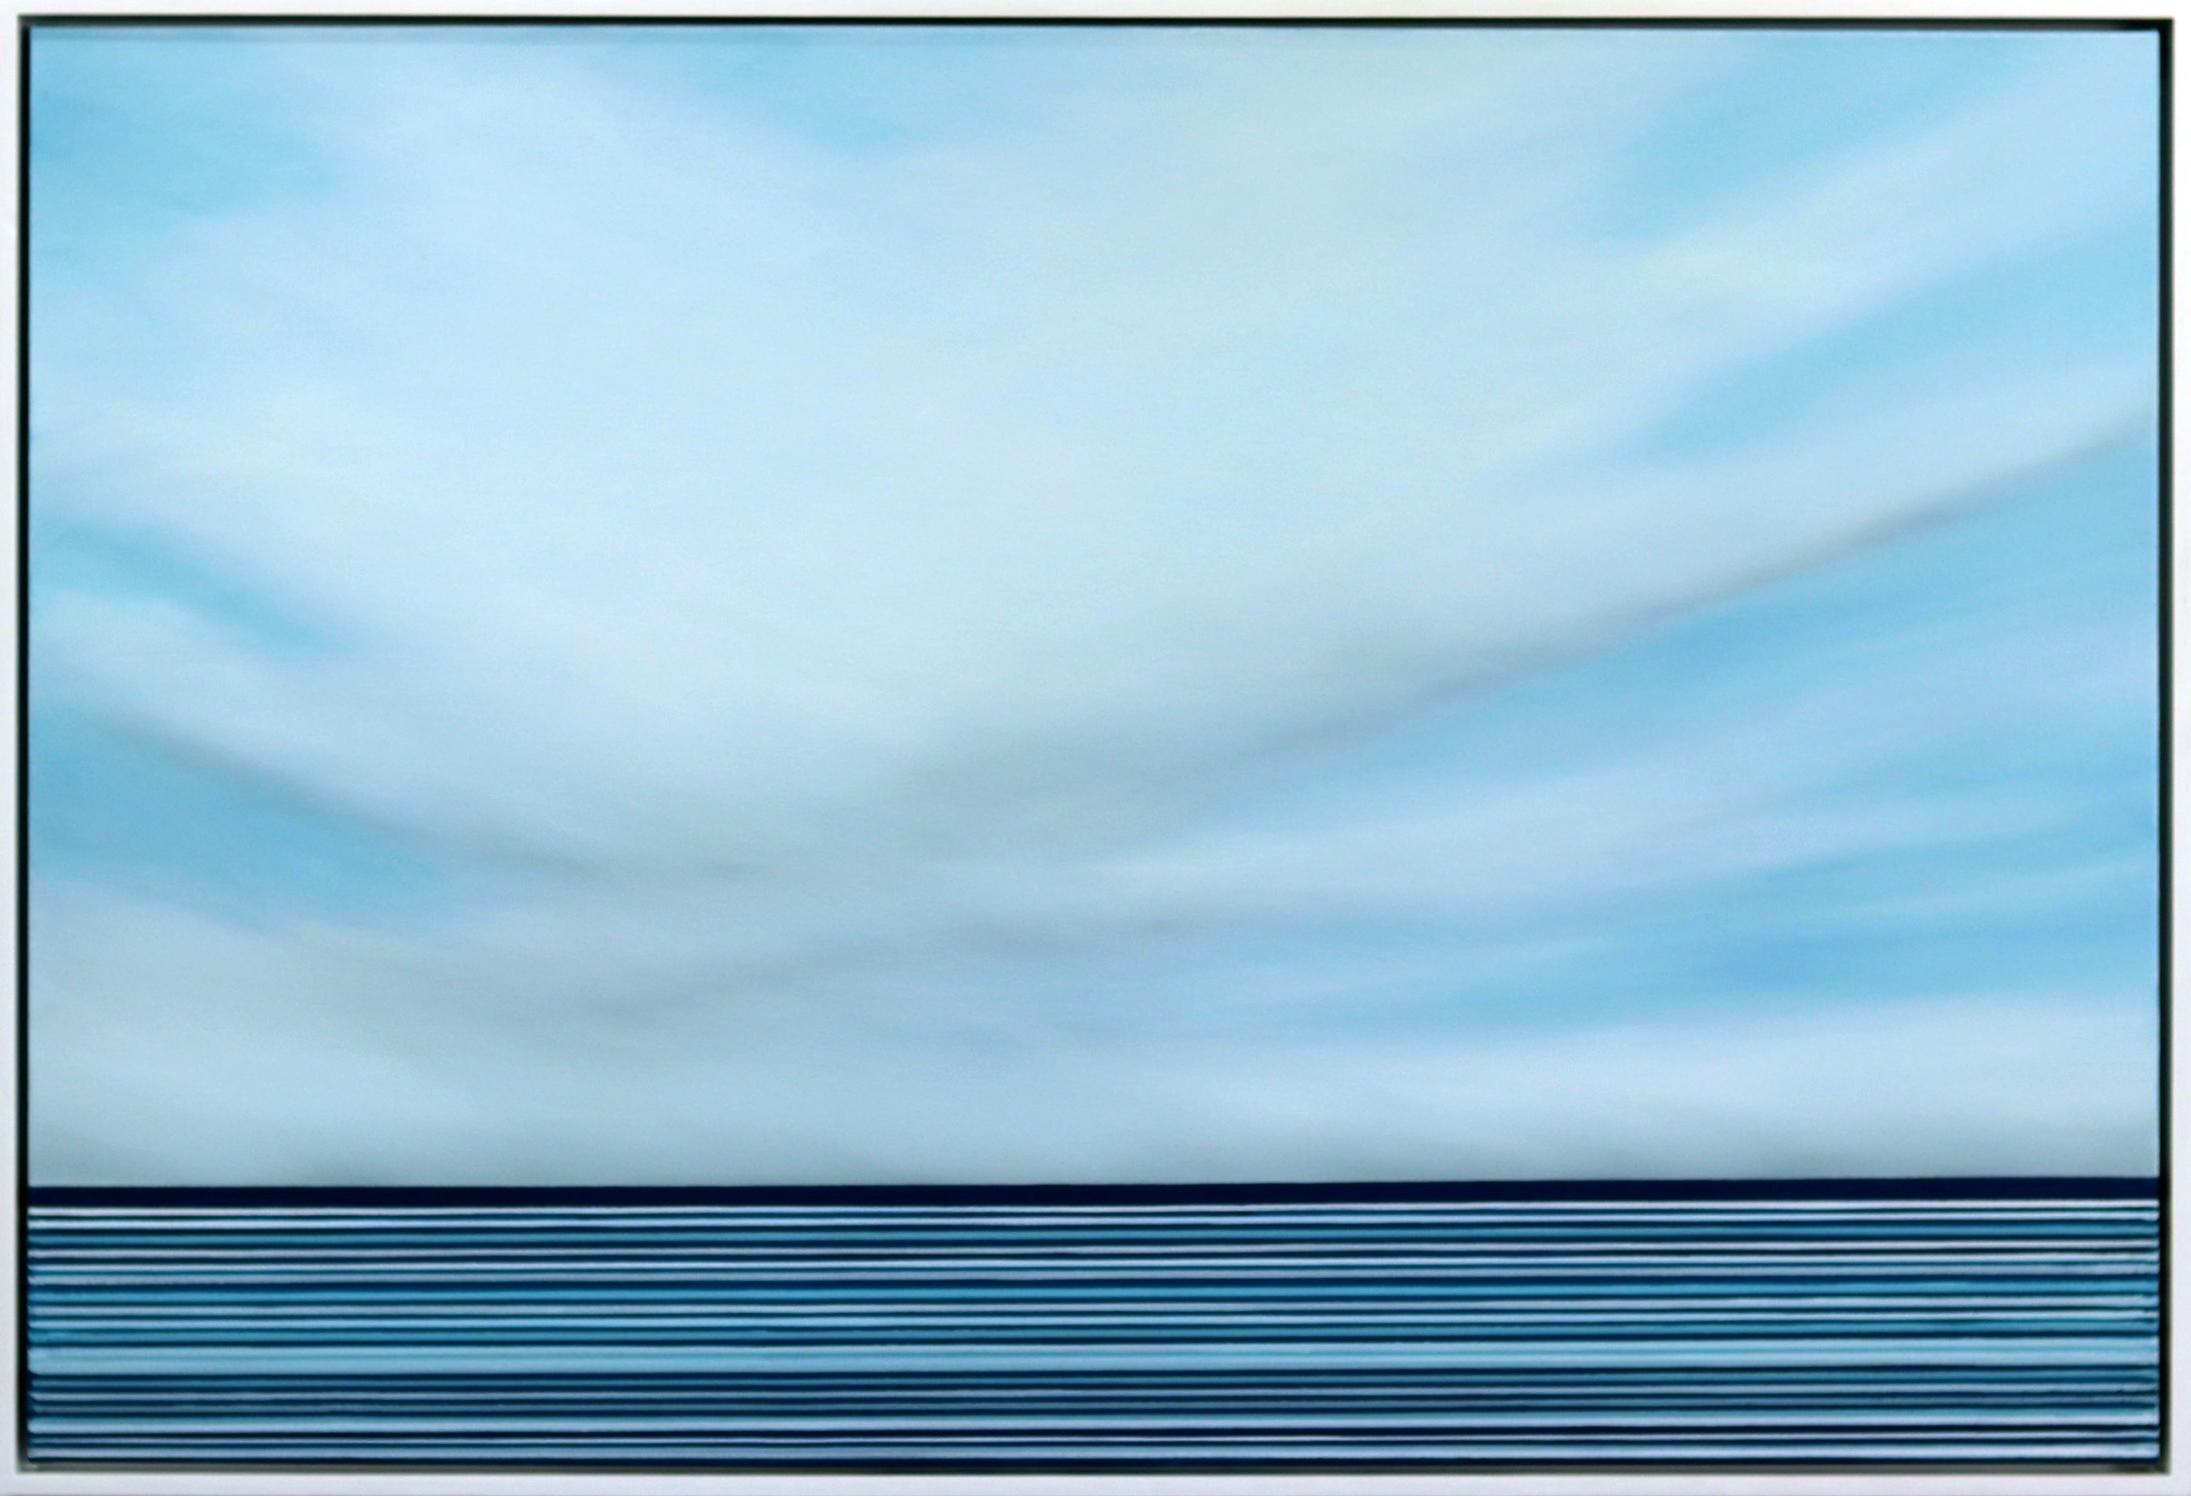 Untitled No. 762 - Framed Contemporary Minimalist Blue Landscape Ocean Artwork